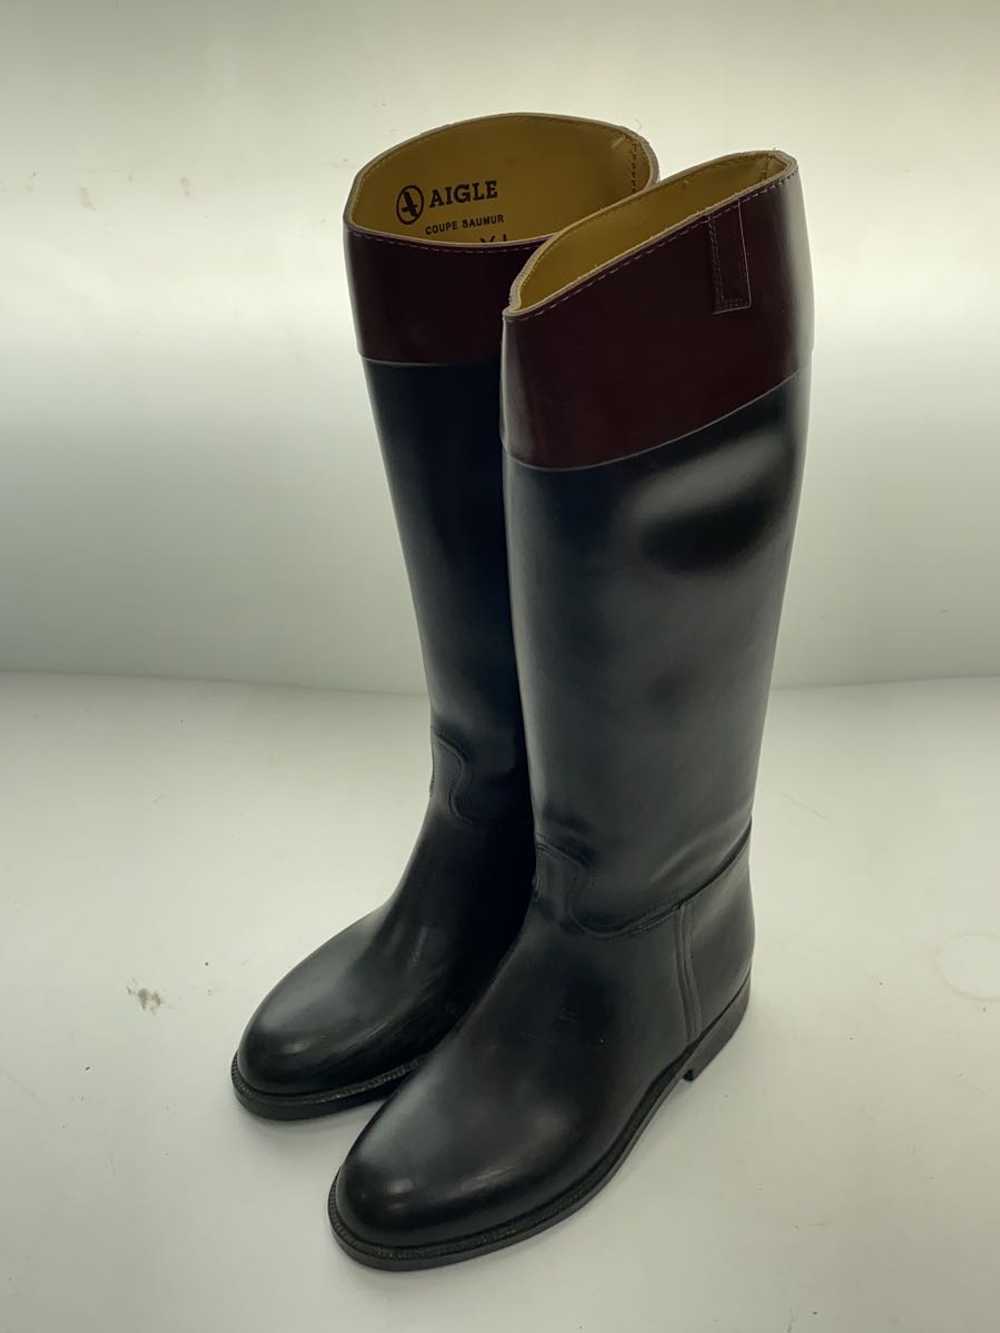 Aigle Rain Boots/37/Brw/8509-29076 Shoes BfK71 - image 2